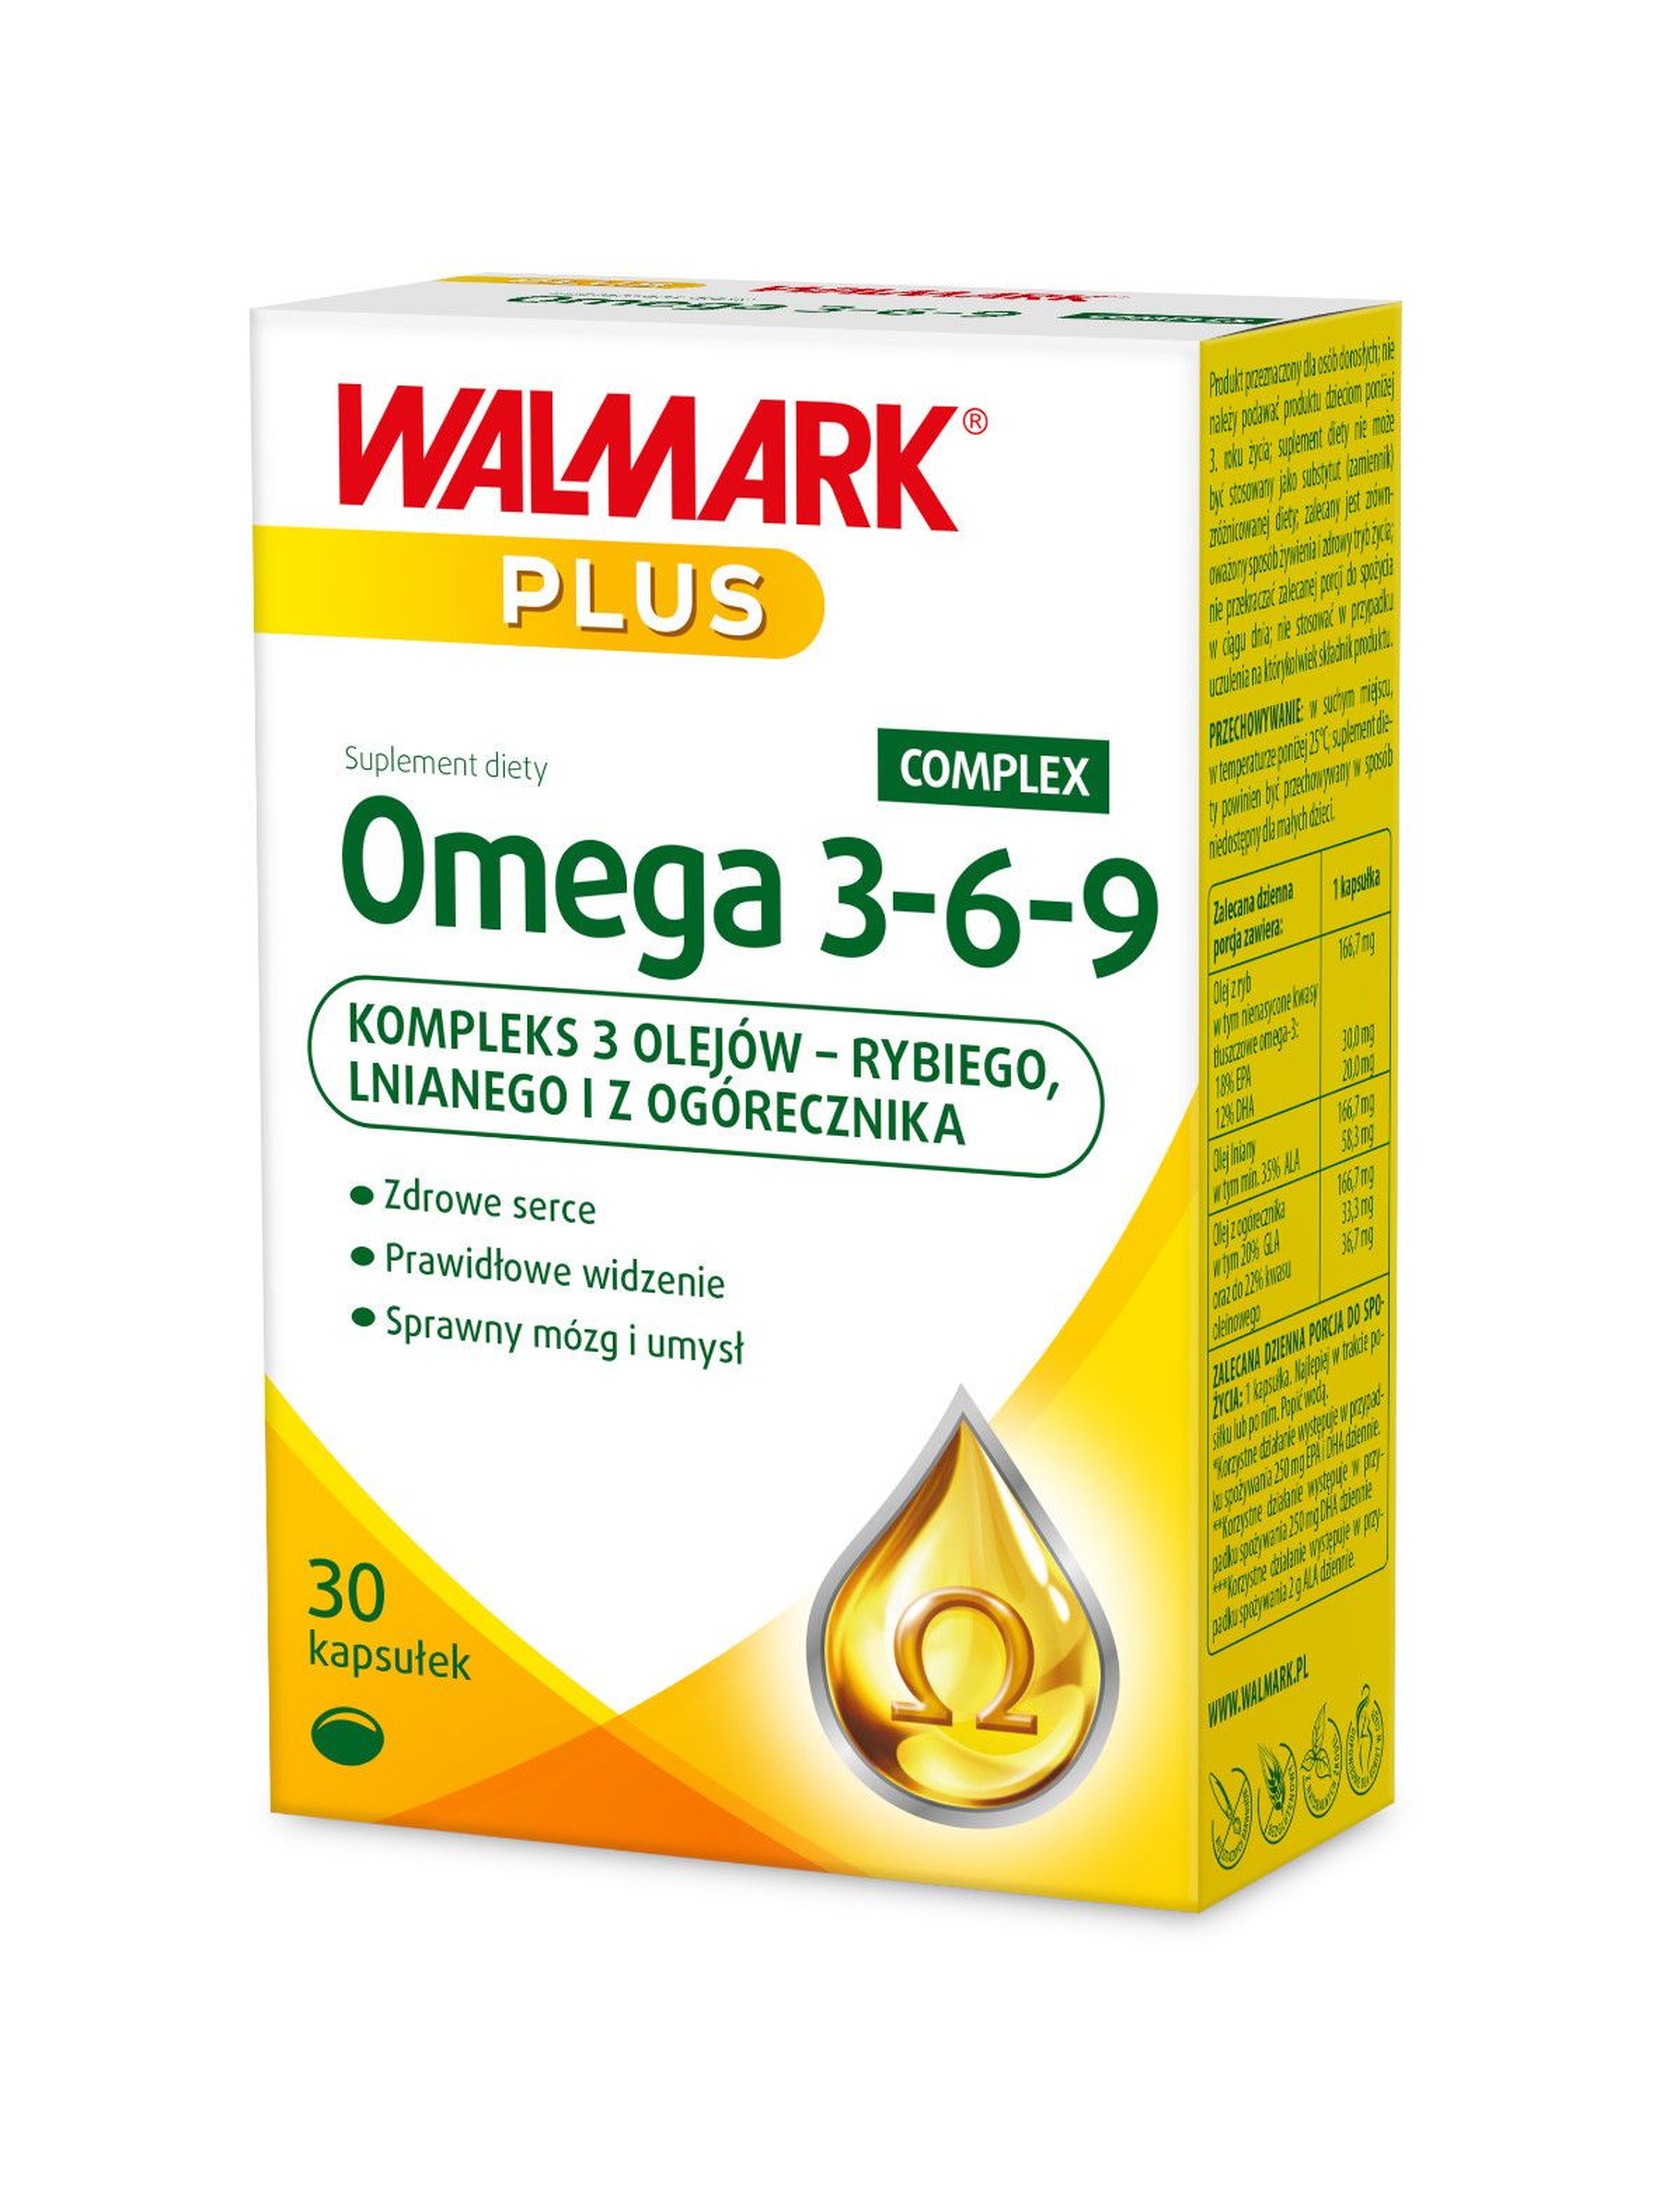 WALMARK Omega 3-6-9 - suplementy diety - 30 kapsułek